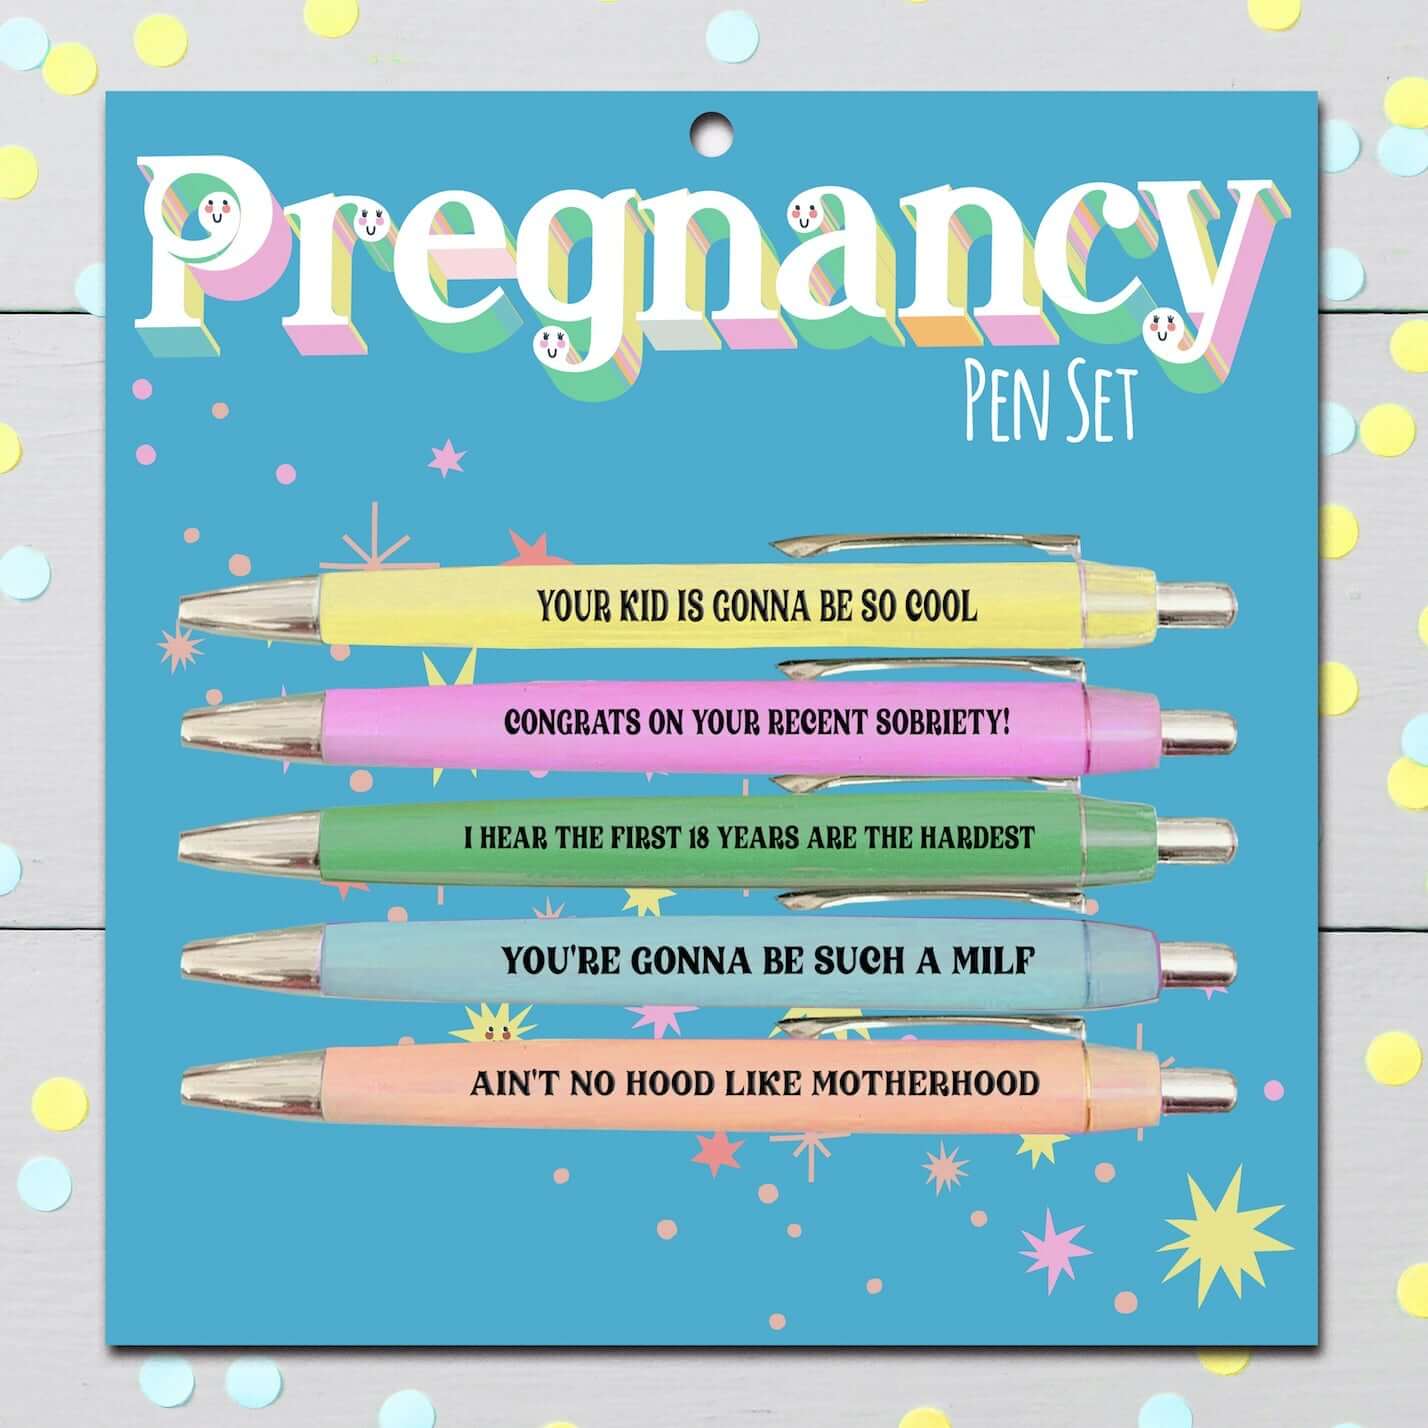 Fun Club Pregnancy New Mum Funny Novelty Pen Set Pen Set Fun Club